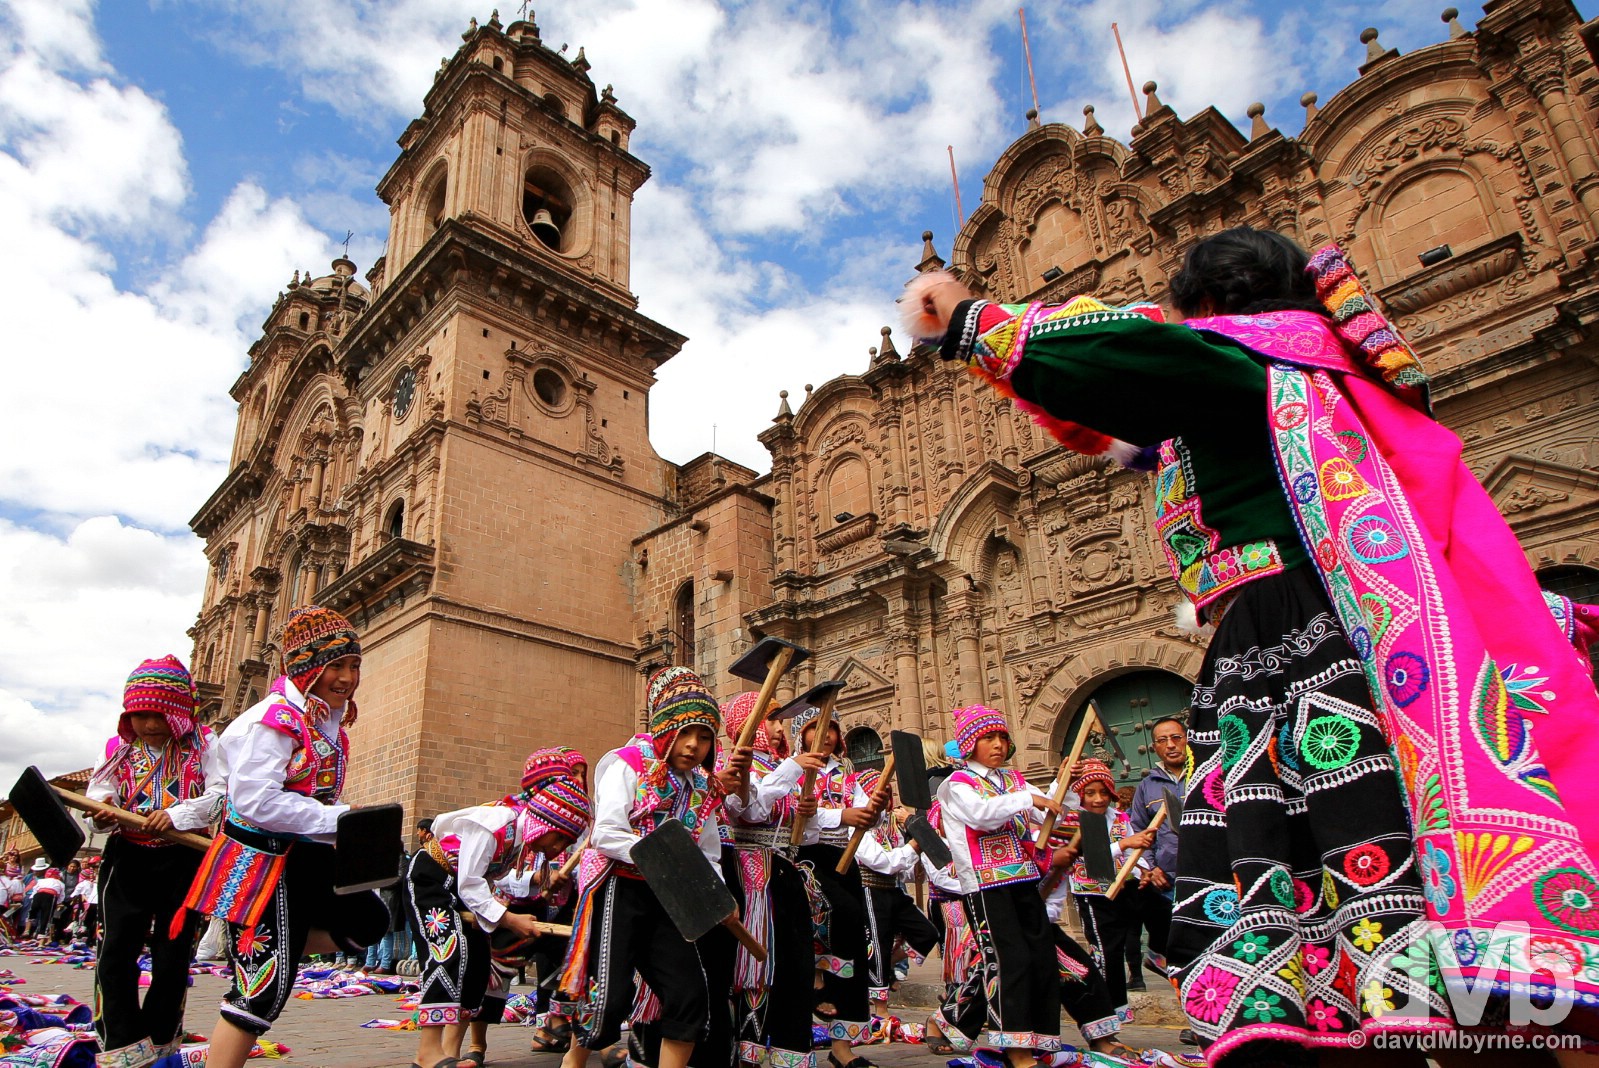 Festival activity outside the twin-towered La Compania de Jesus on Plaza de Armas, Cusco, Peru. August 16, 2015.